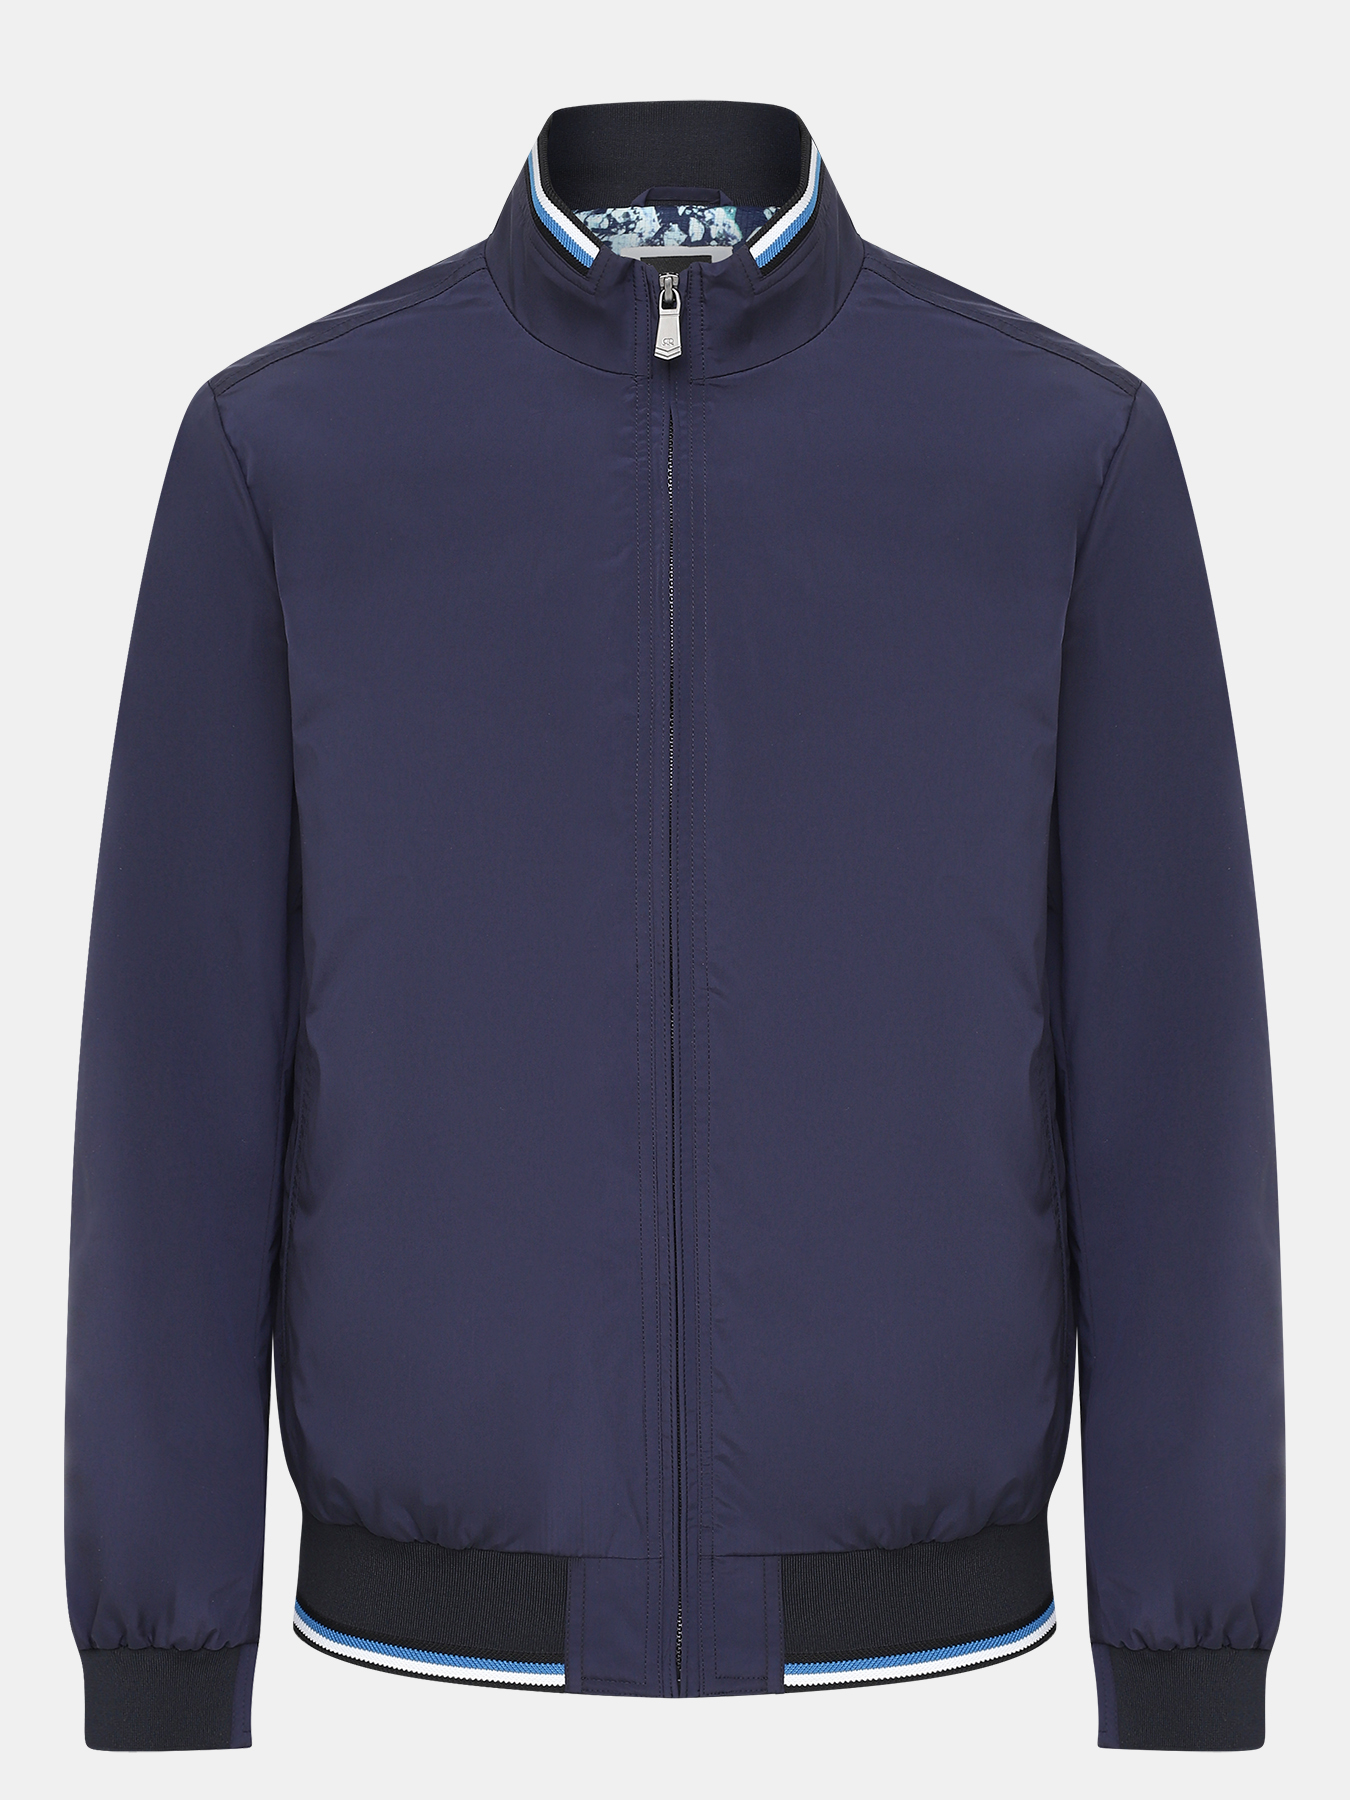 Куртка Ritter 402899-024, цвет синий, размер 46 - фото 1